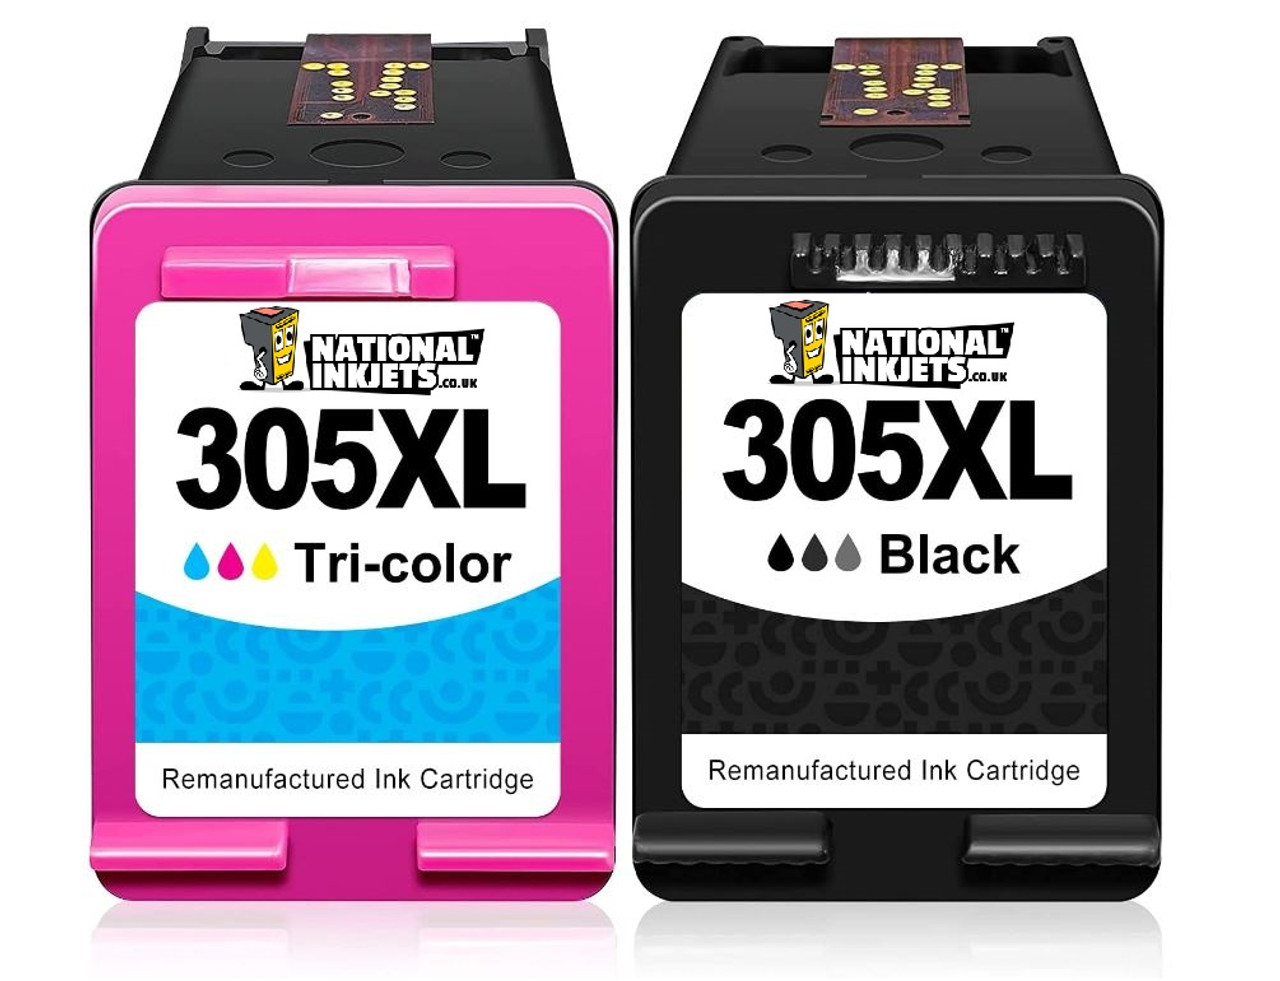 Compatible HP 305XL Black High Capacity Ink Cartridge